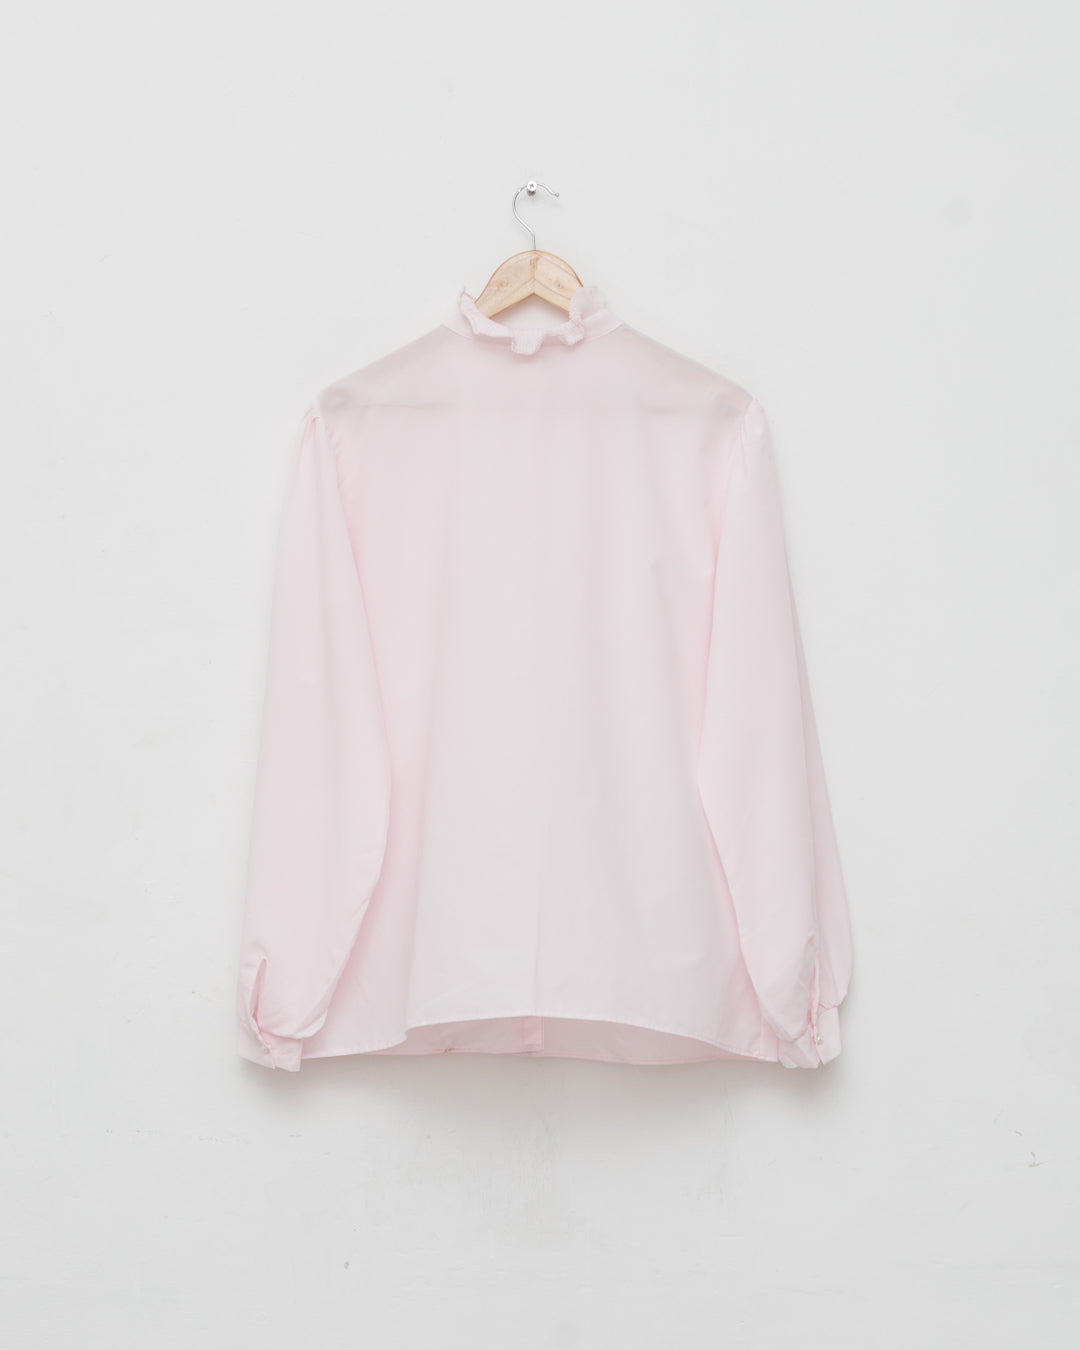 Powder pink ruffle collar shirt